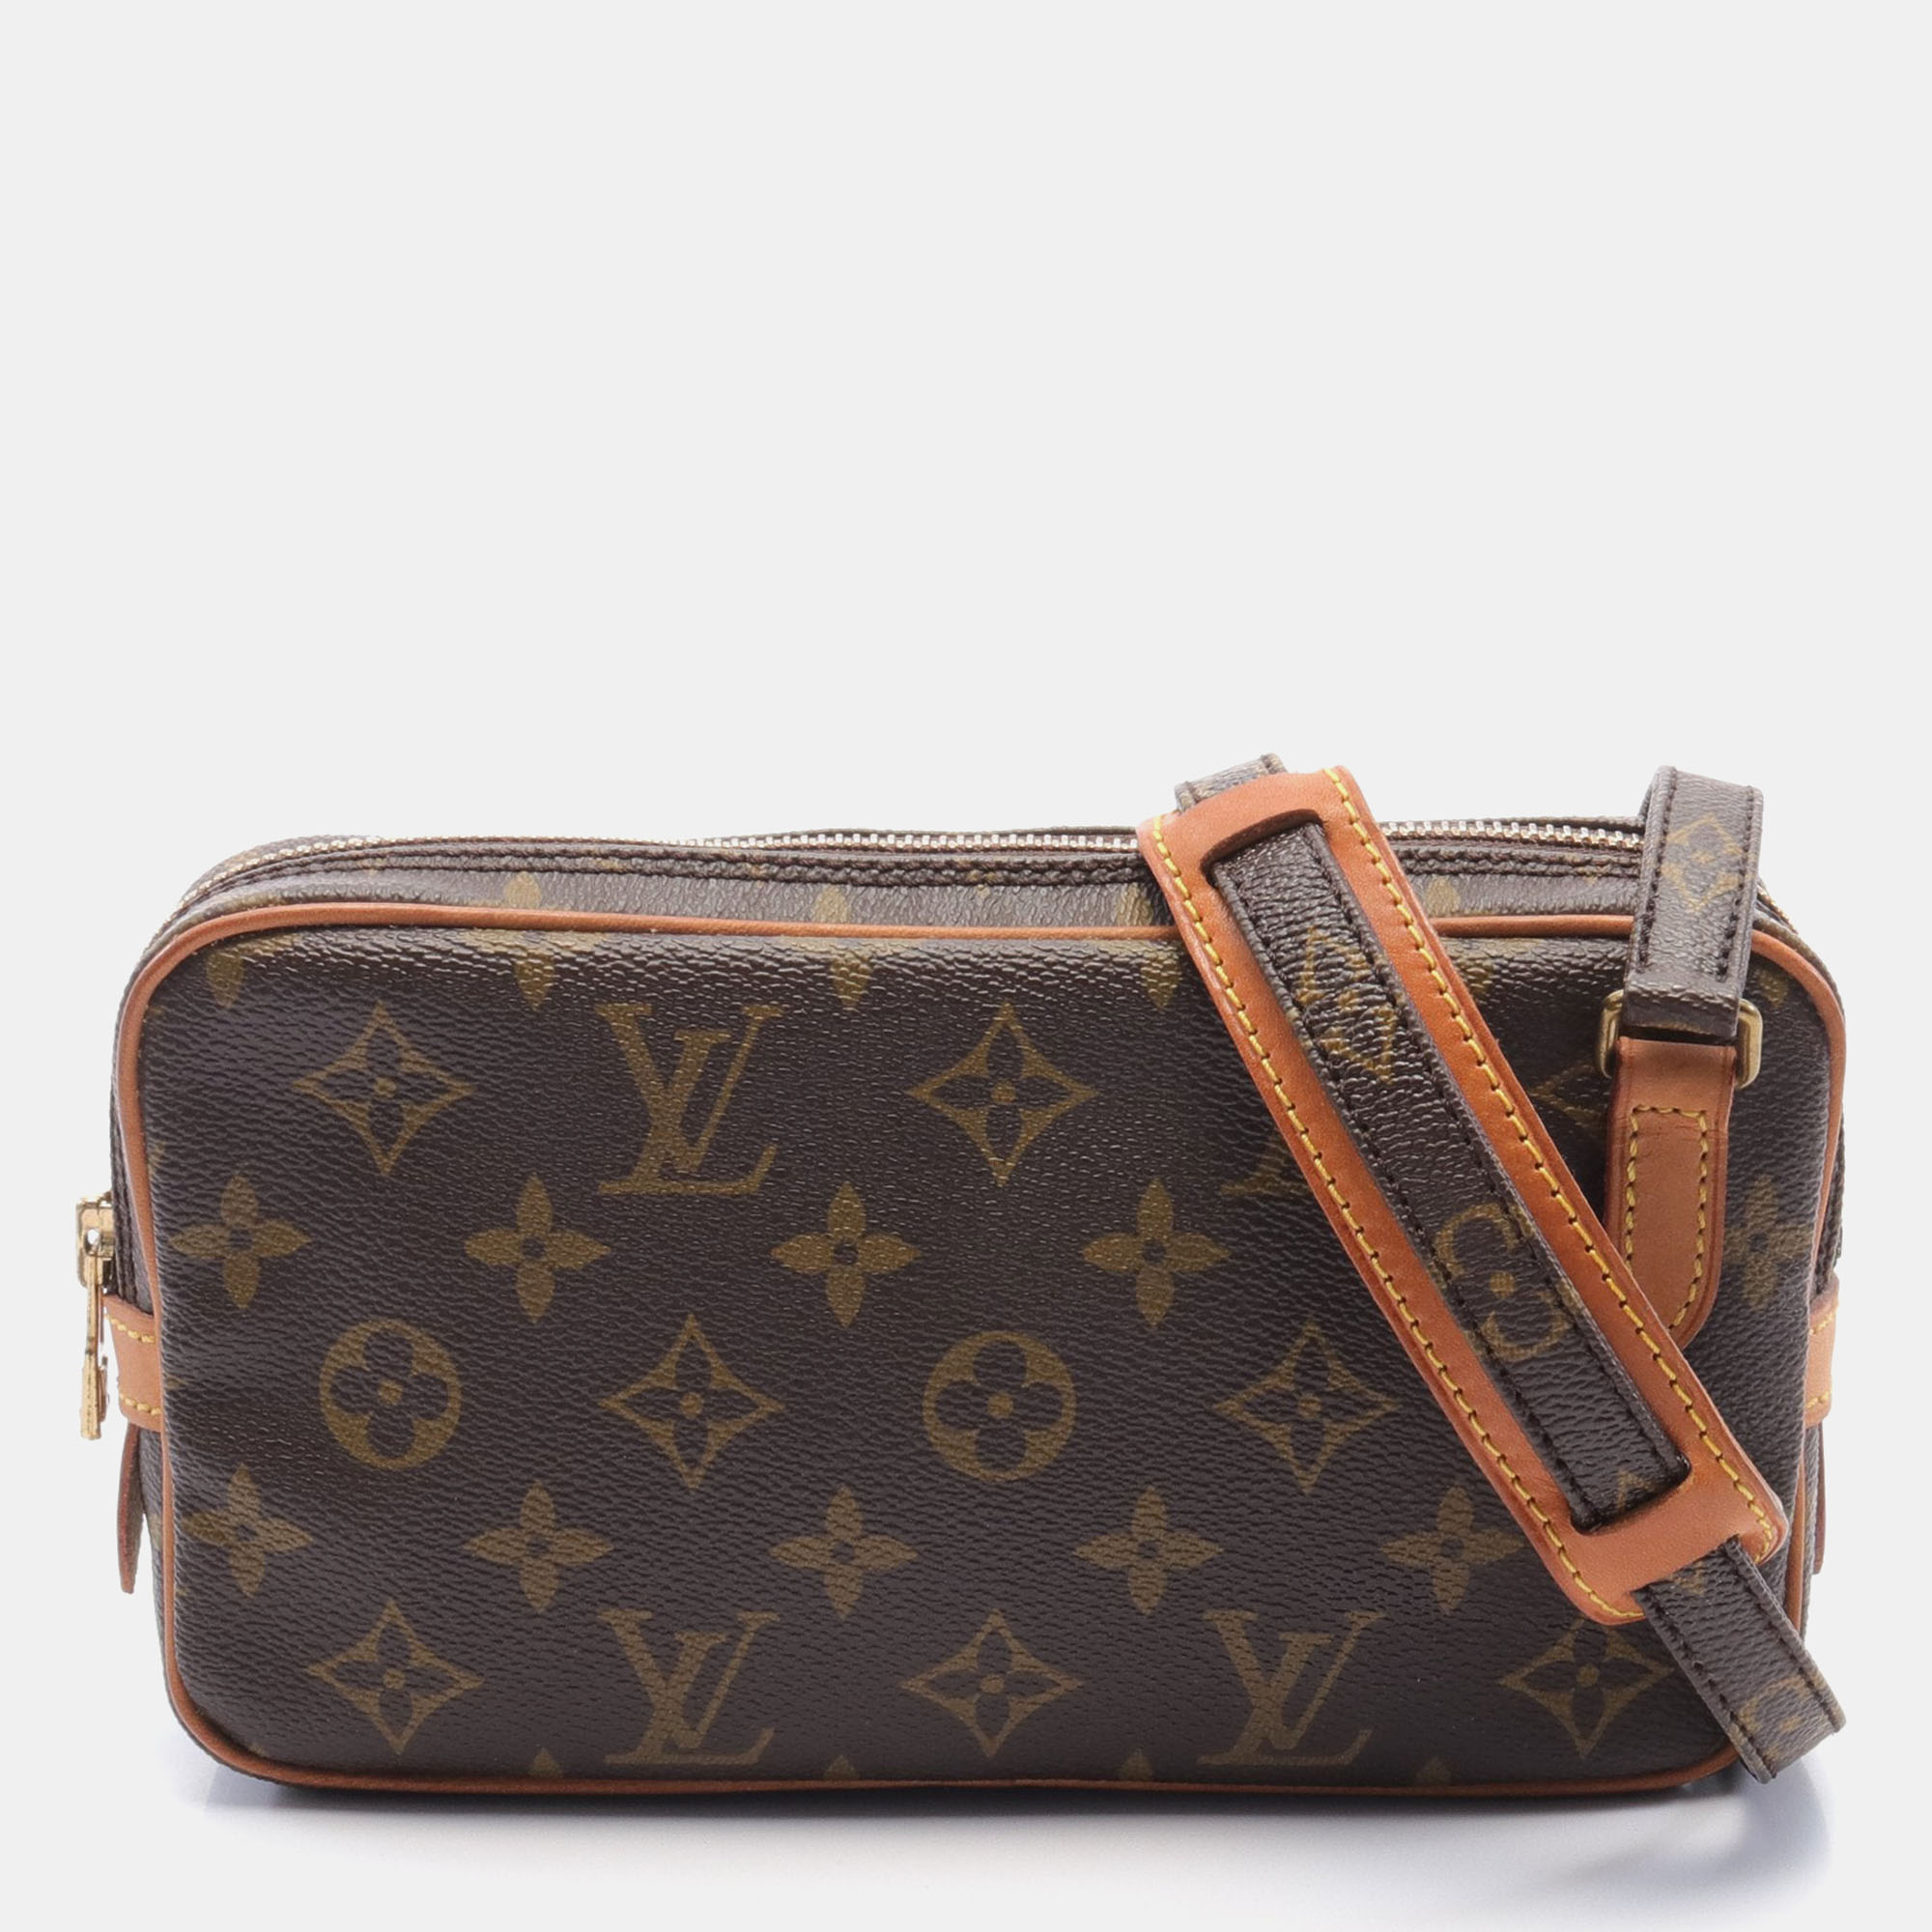 Louis vuitton marly bandouliere monogram shoulder bag pvc leather brown